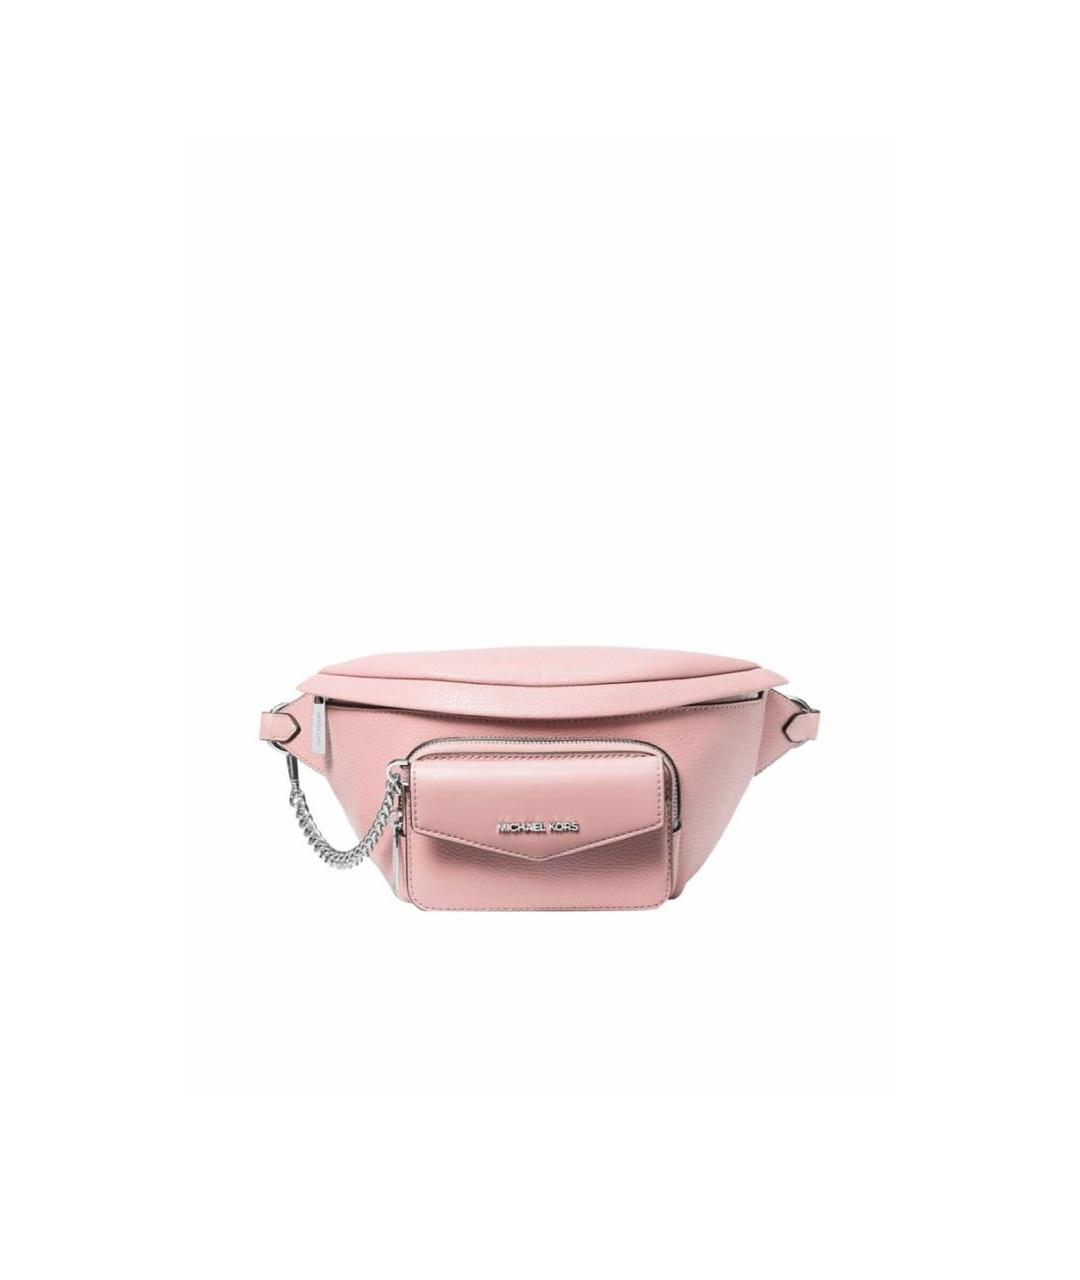 MICHAEL KORS Розовая кожаная поясная сумка, фото 1